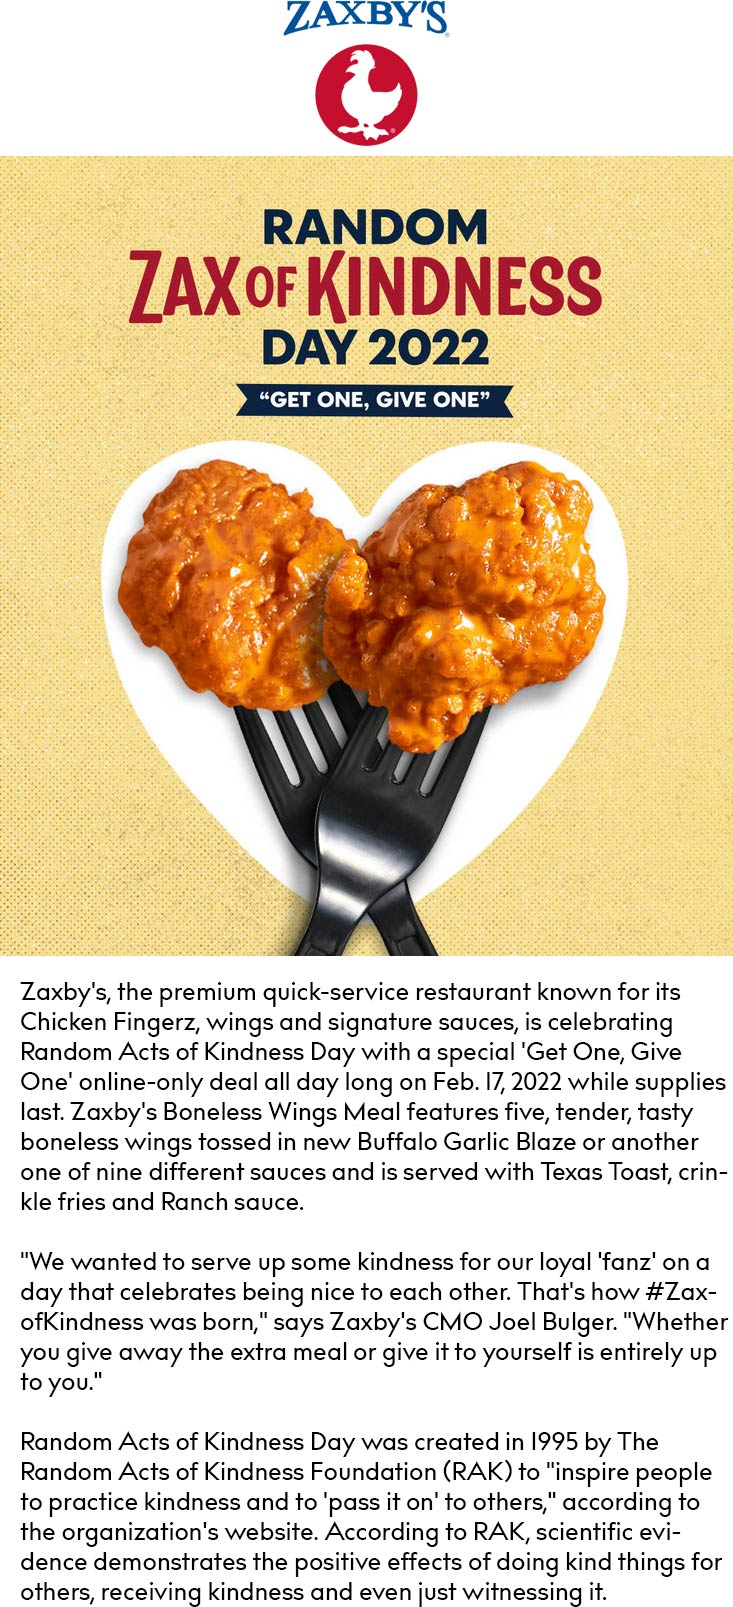 Zaxbys restaurants Coupon  Second boneless wings meal free today at Zaxbys restaurants #zaxbys 